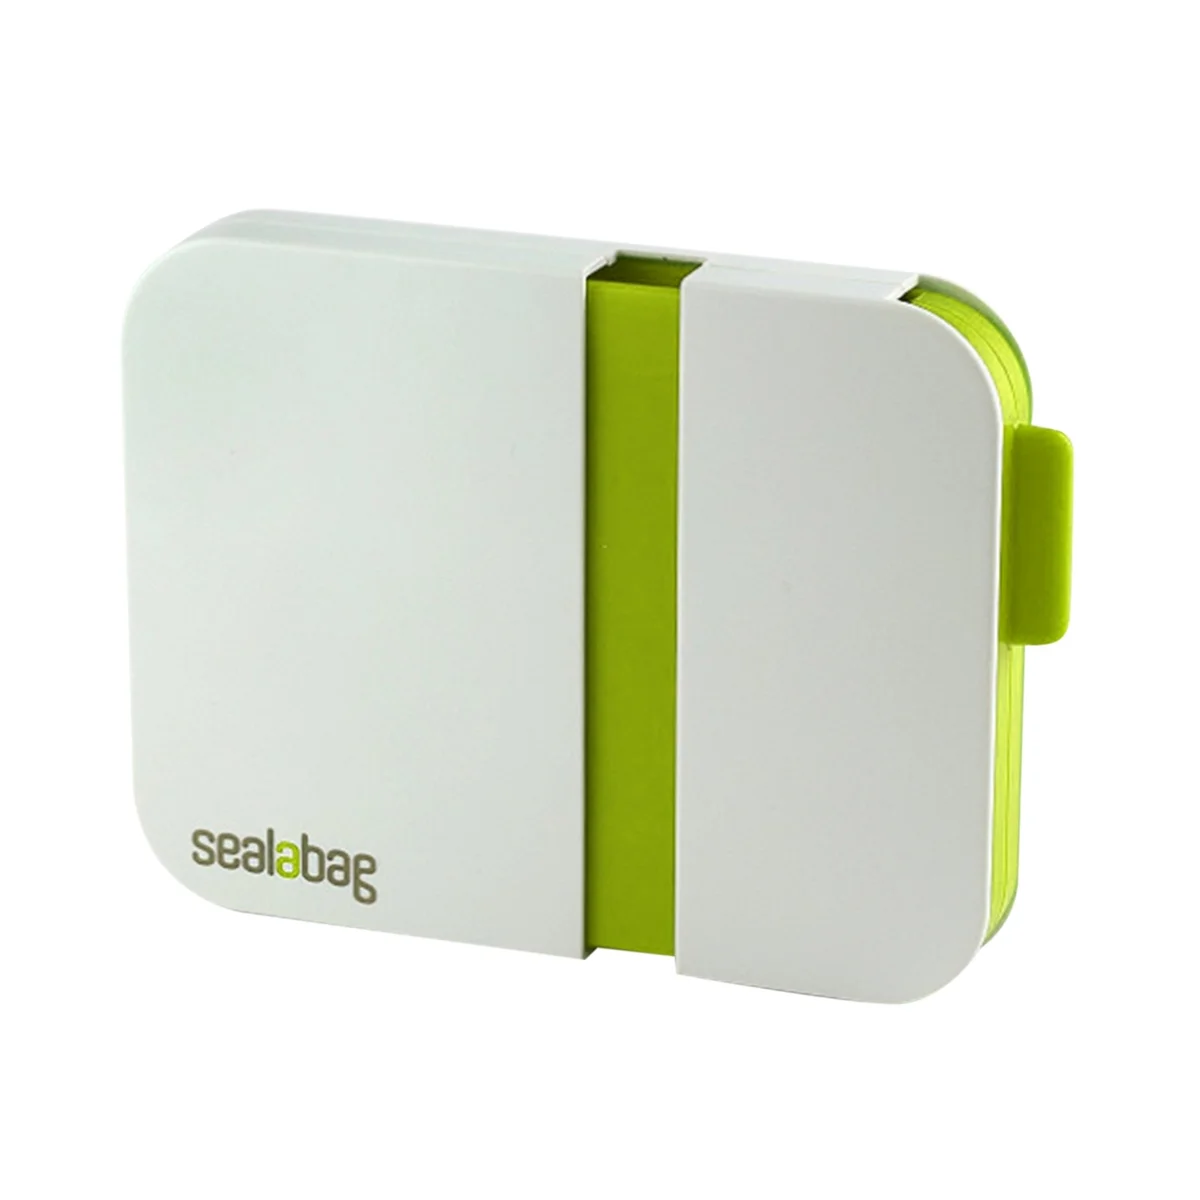 

Portable Machines Mini Handy Sealing Household Heat Food Clip Heat Sealer Home Snack Bag Kitchen Utensils Gadget Green